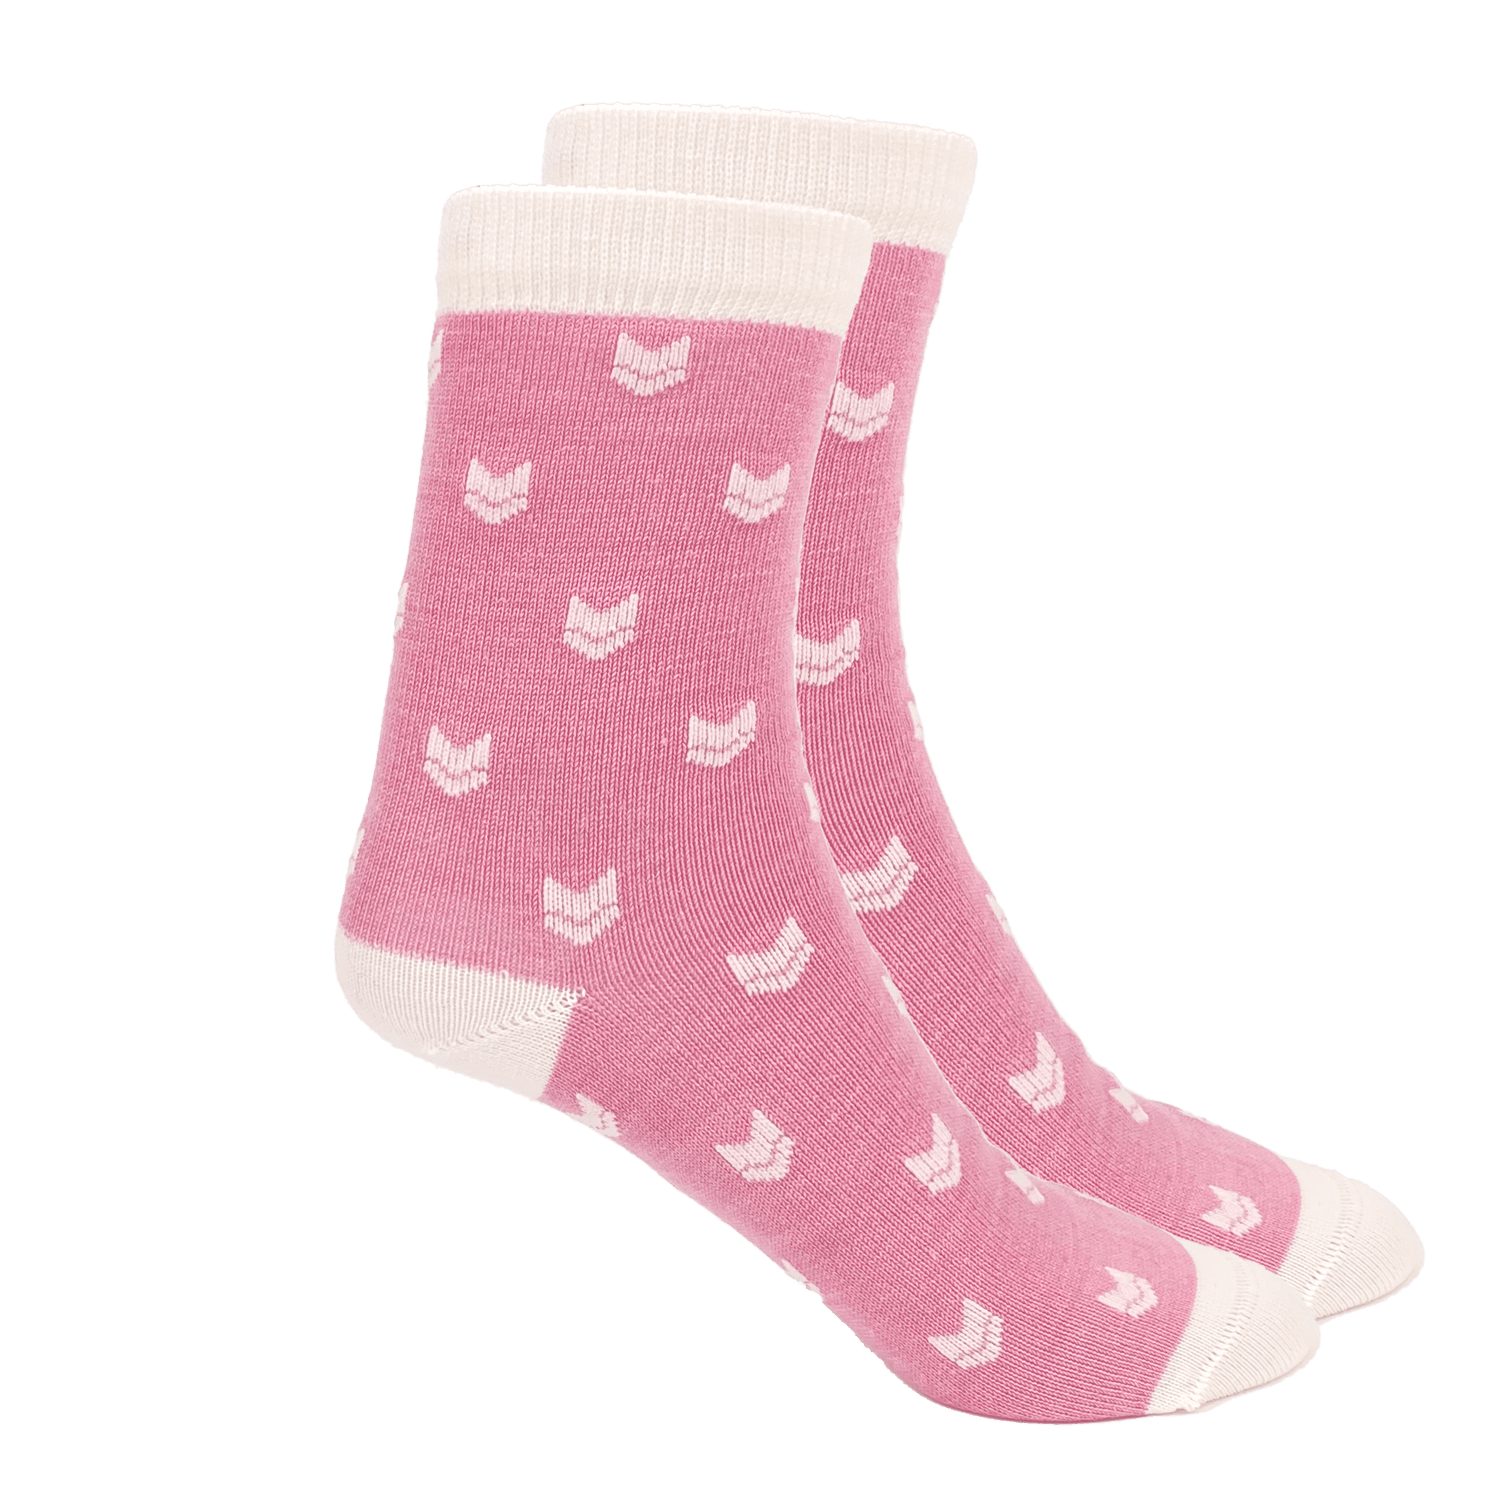 VAI-KØ Logo Socks - Merino Wool Hazy Pink Socks